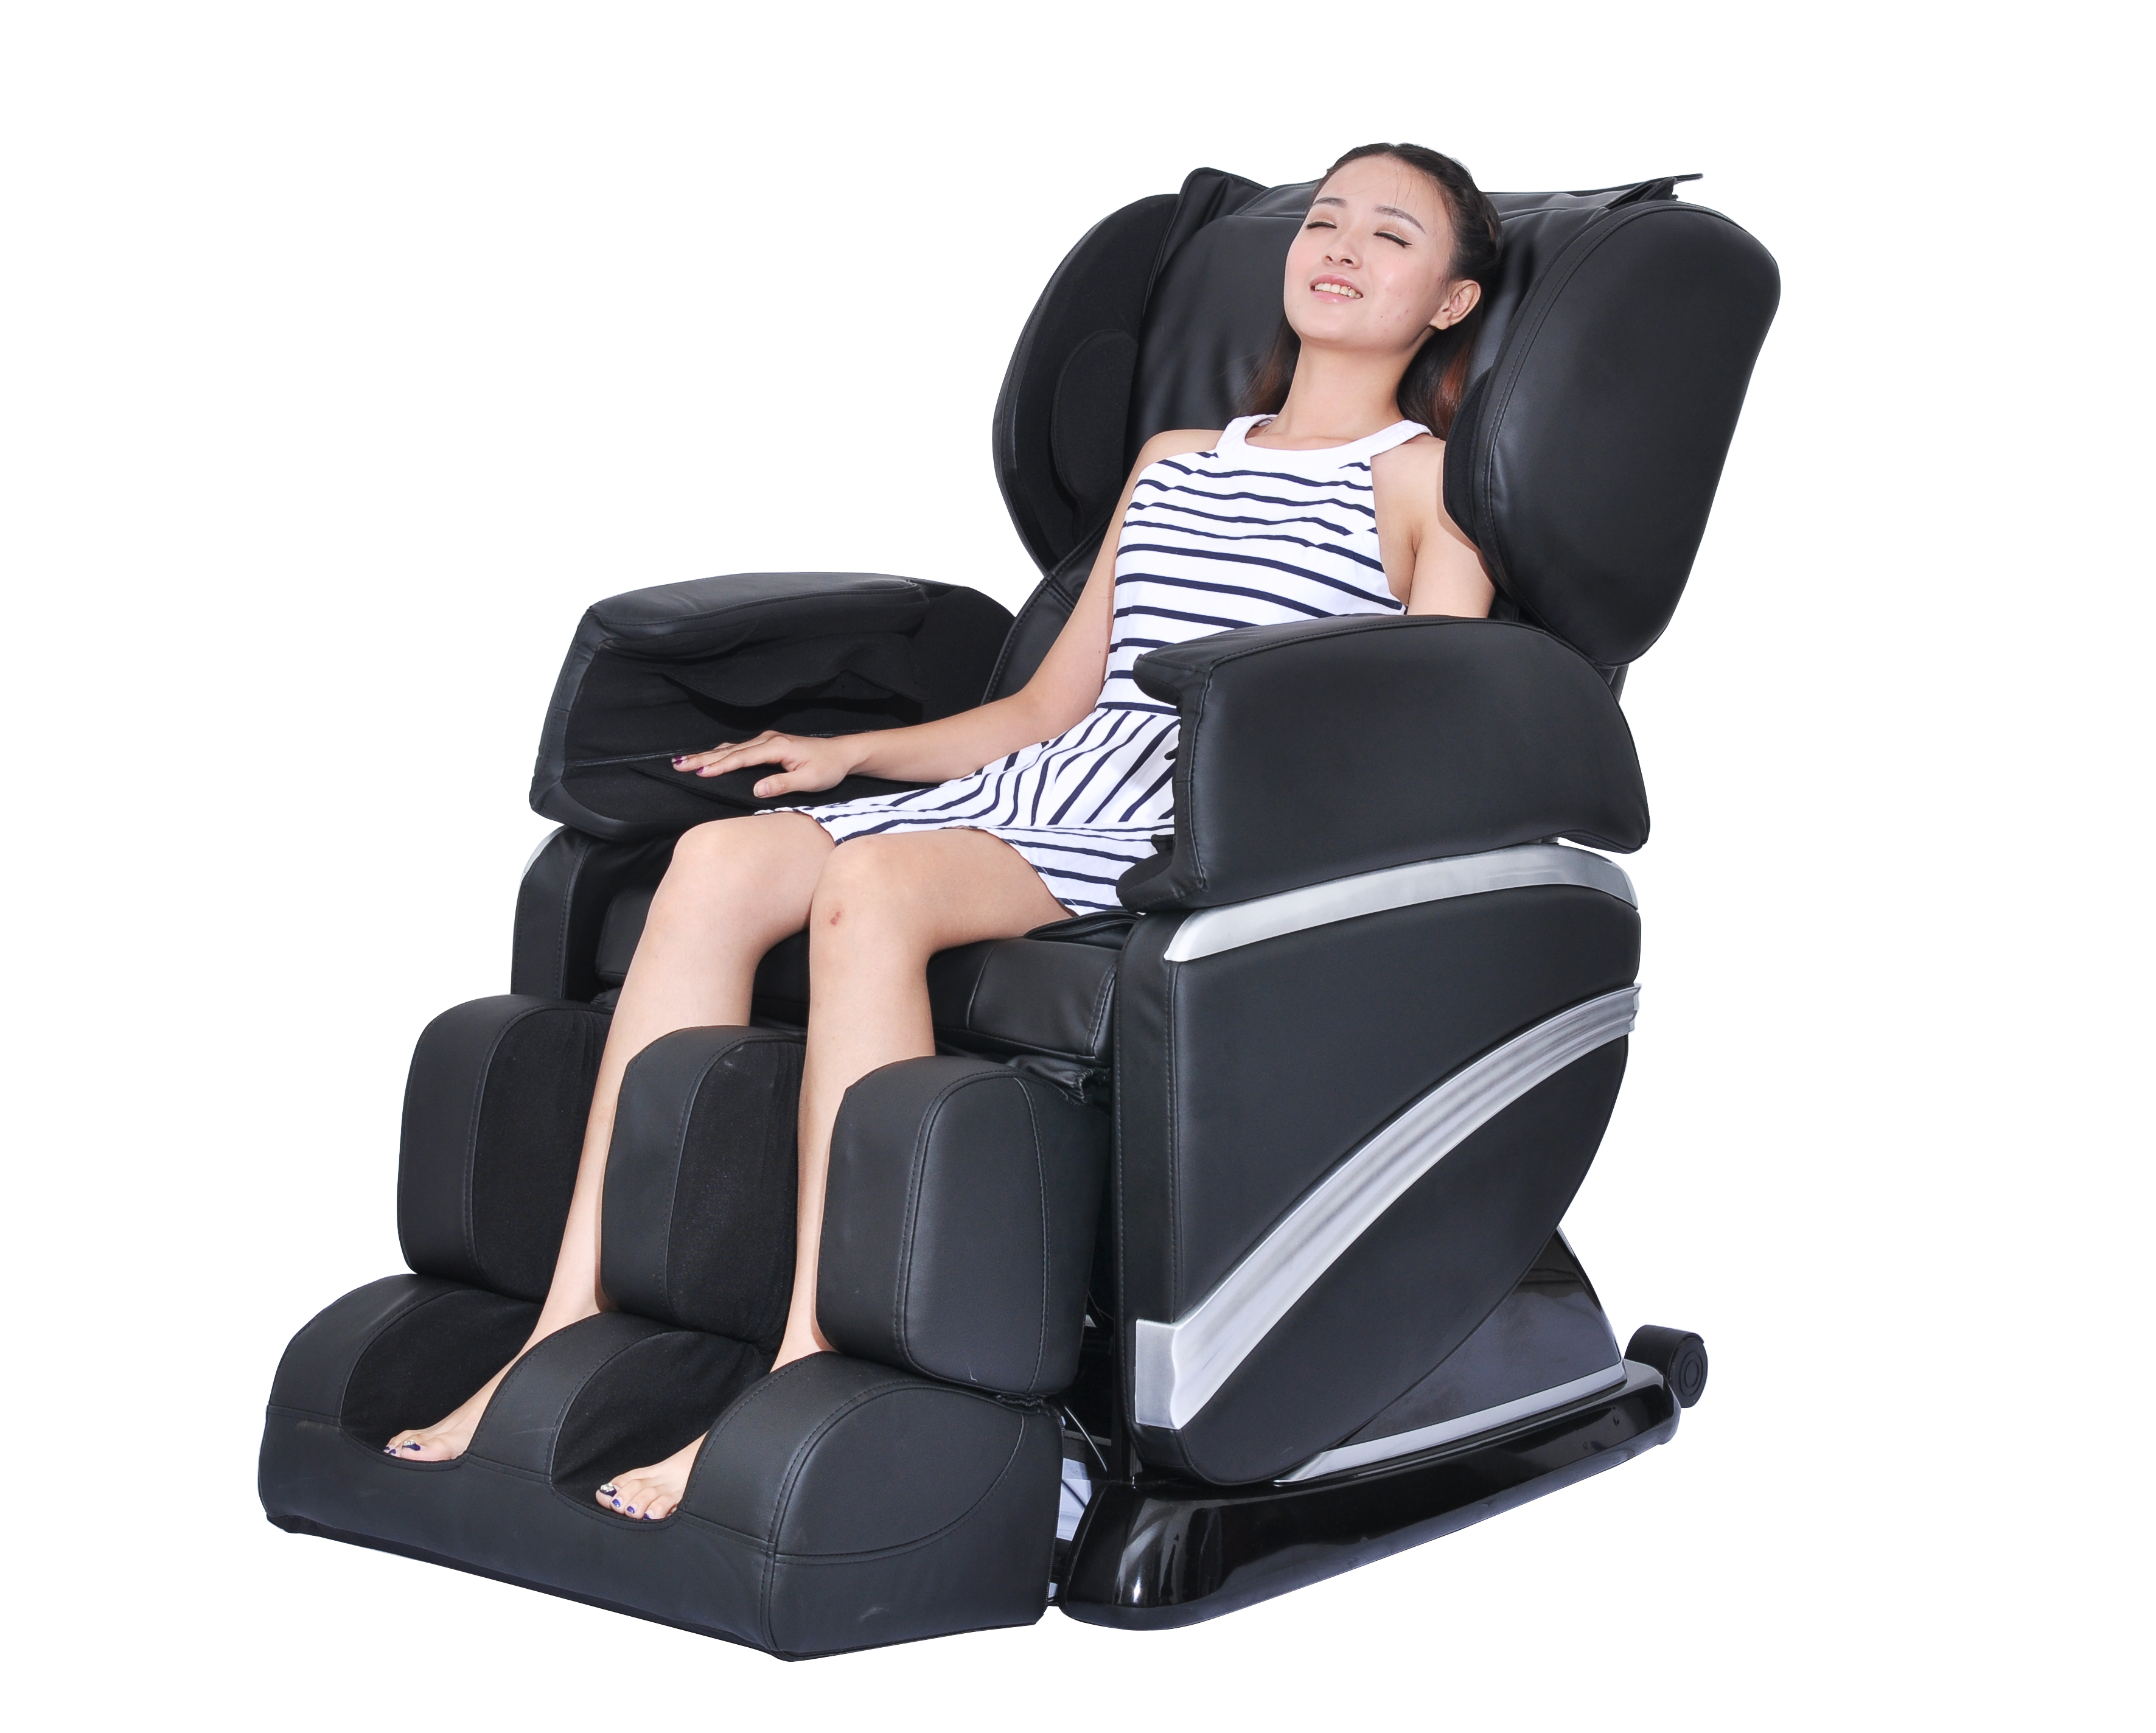 MCombo Full Body Massage Chair Shiatsu Vibrate Heat Recliner Stretched